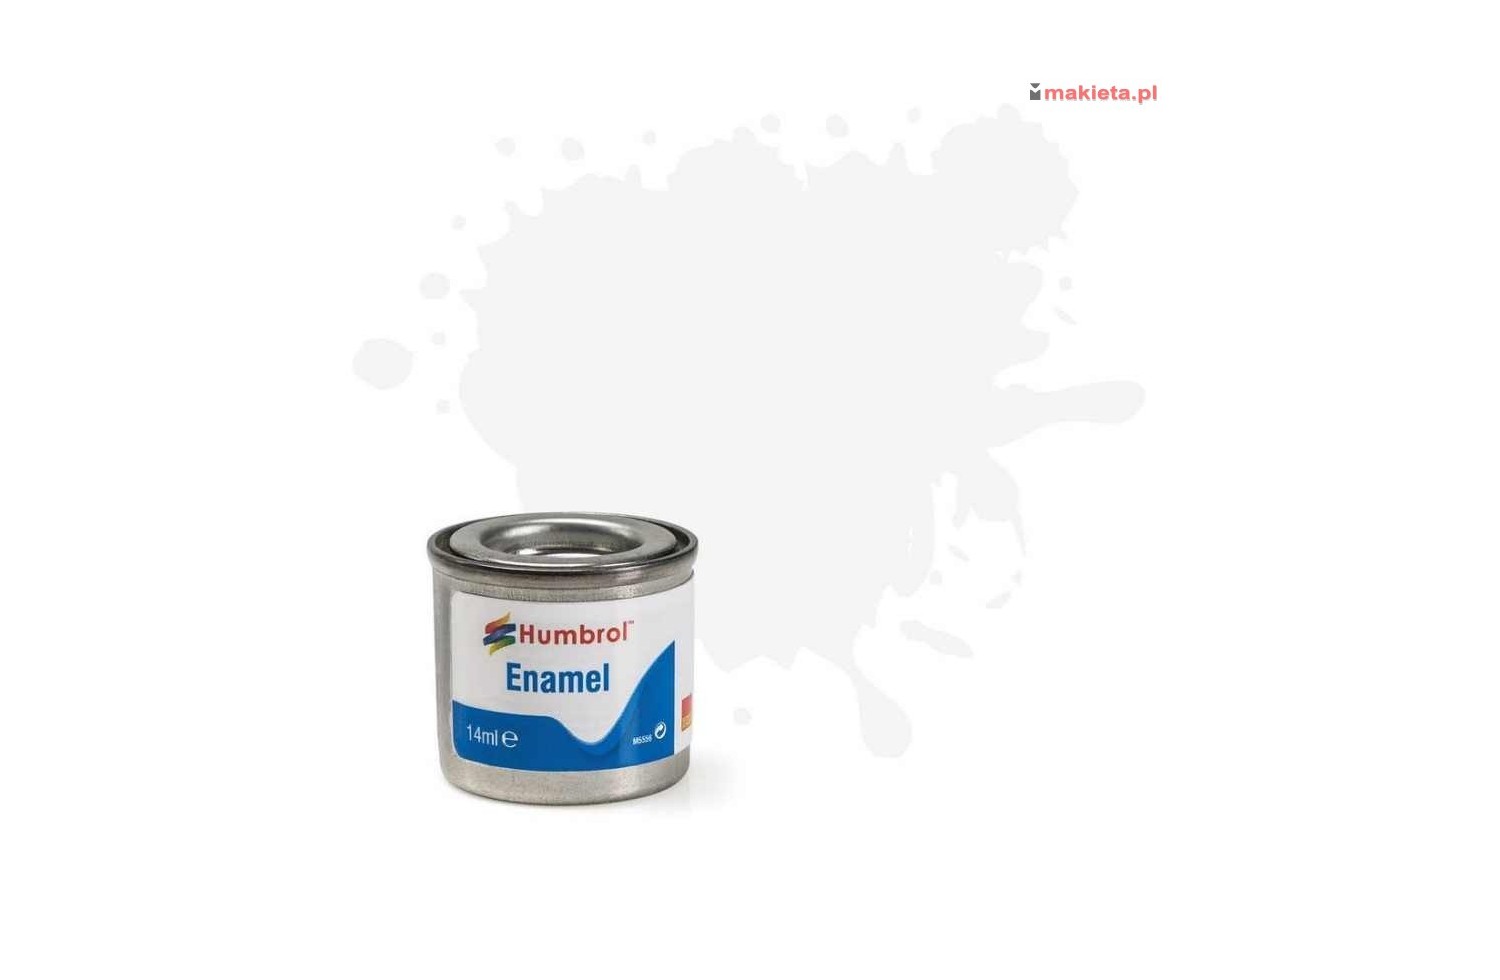 Humbrol H130. White - Satin, biały półmatowy. Humbrol Enamel 14 ml